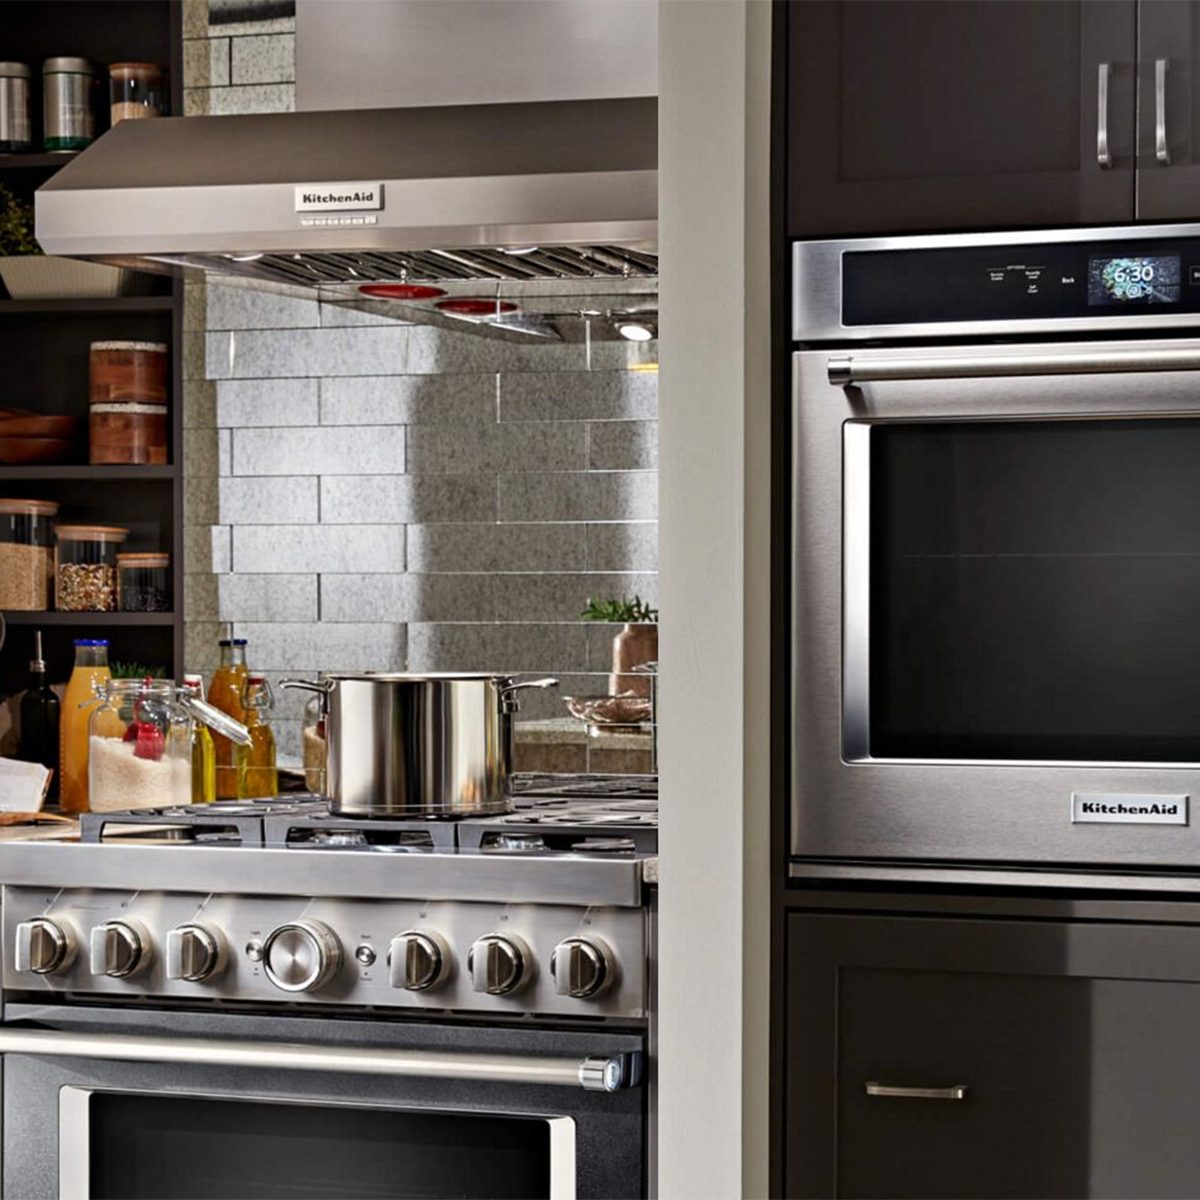 KitchenAid Appliances & KitchenAid Small Appliances